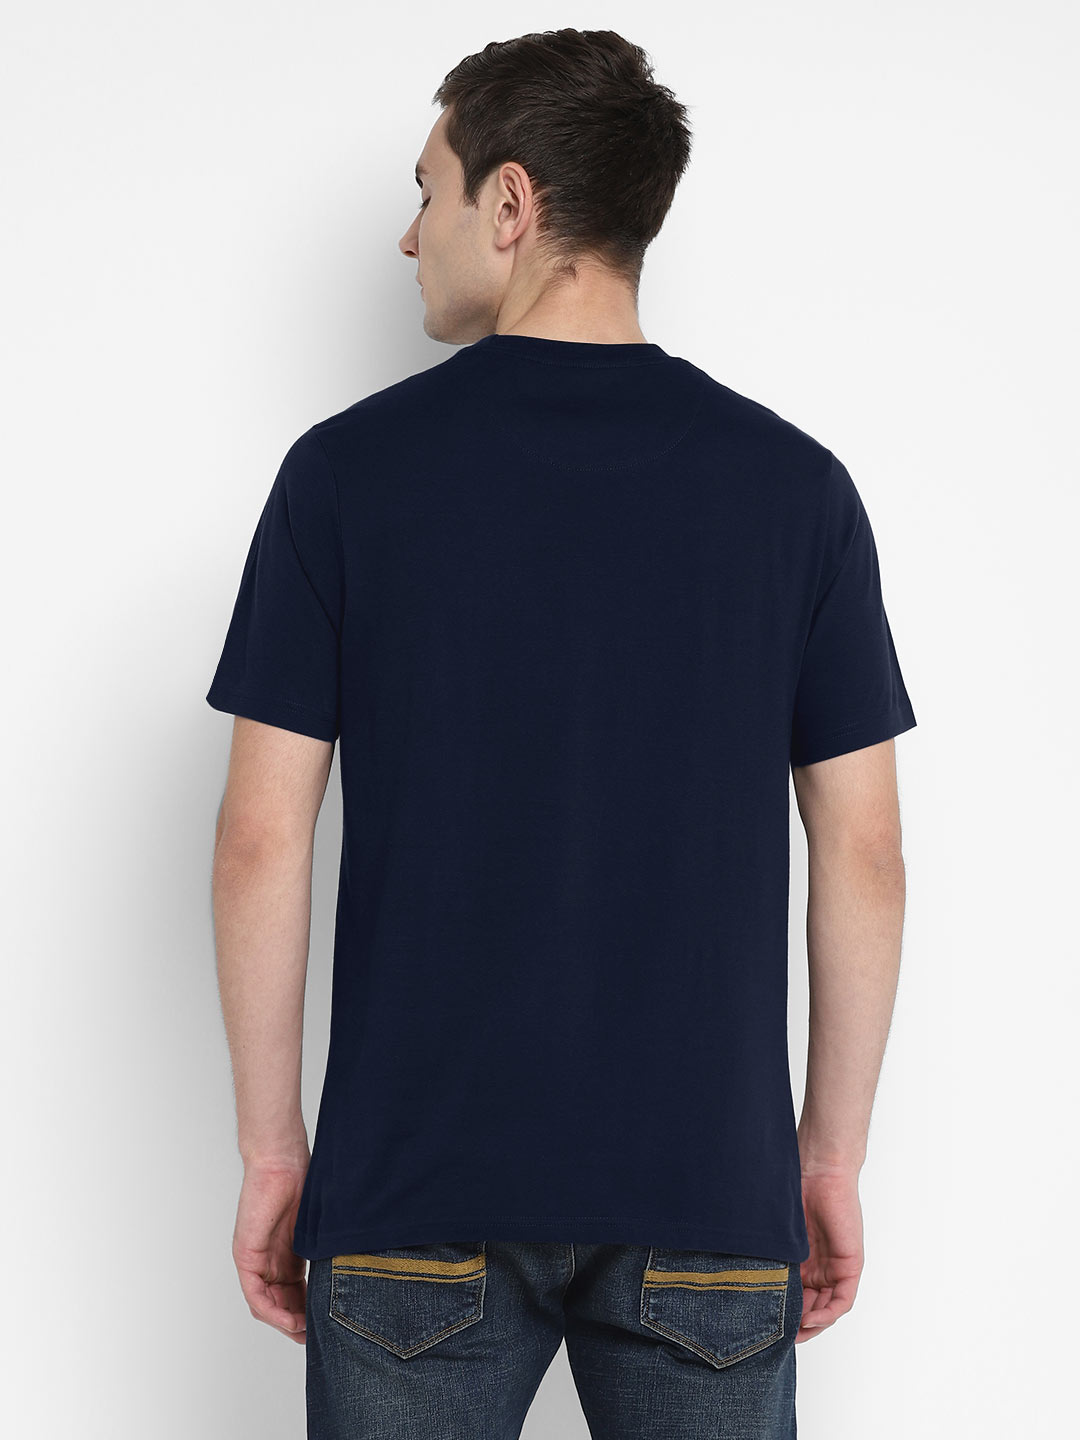 Supima Cotton Round Neck T-Shirt for Men - Navy Blue